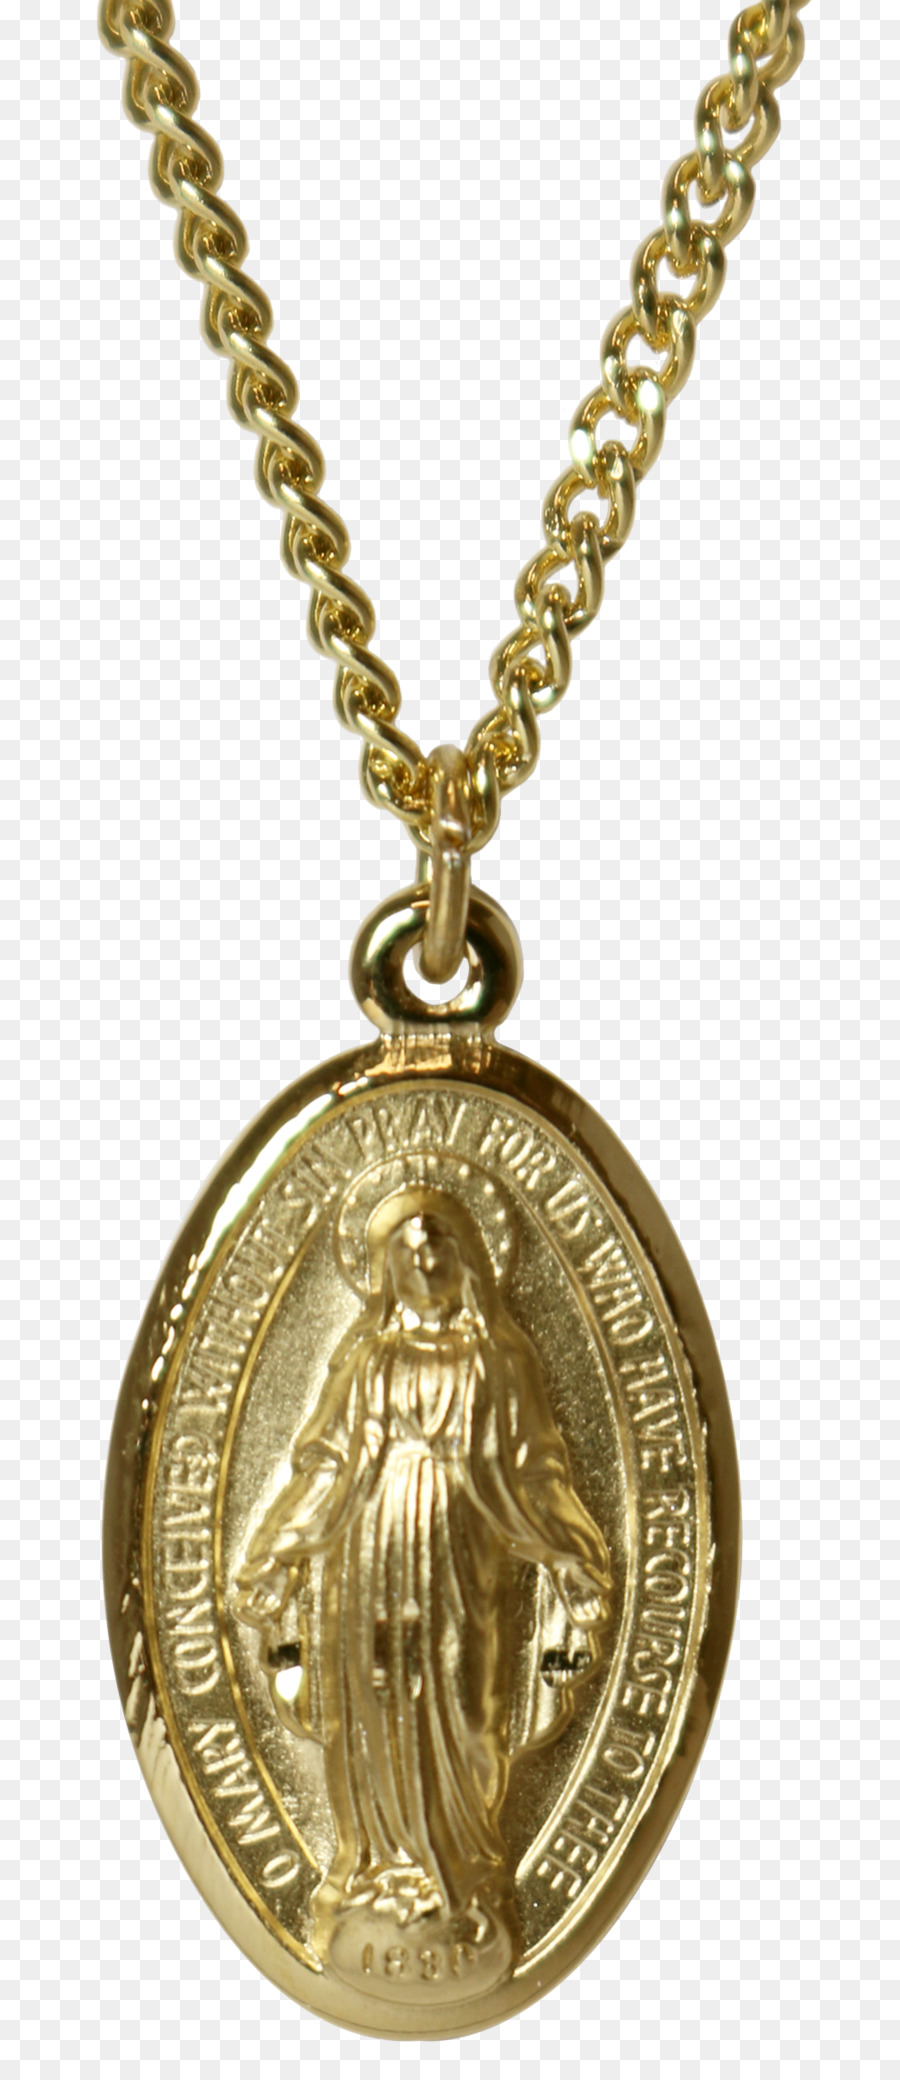 Vereins Wundertätige Medaille Gold Medaille St. Benedikt Medaille - Medaille